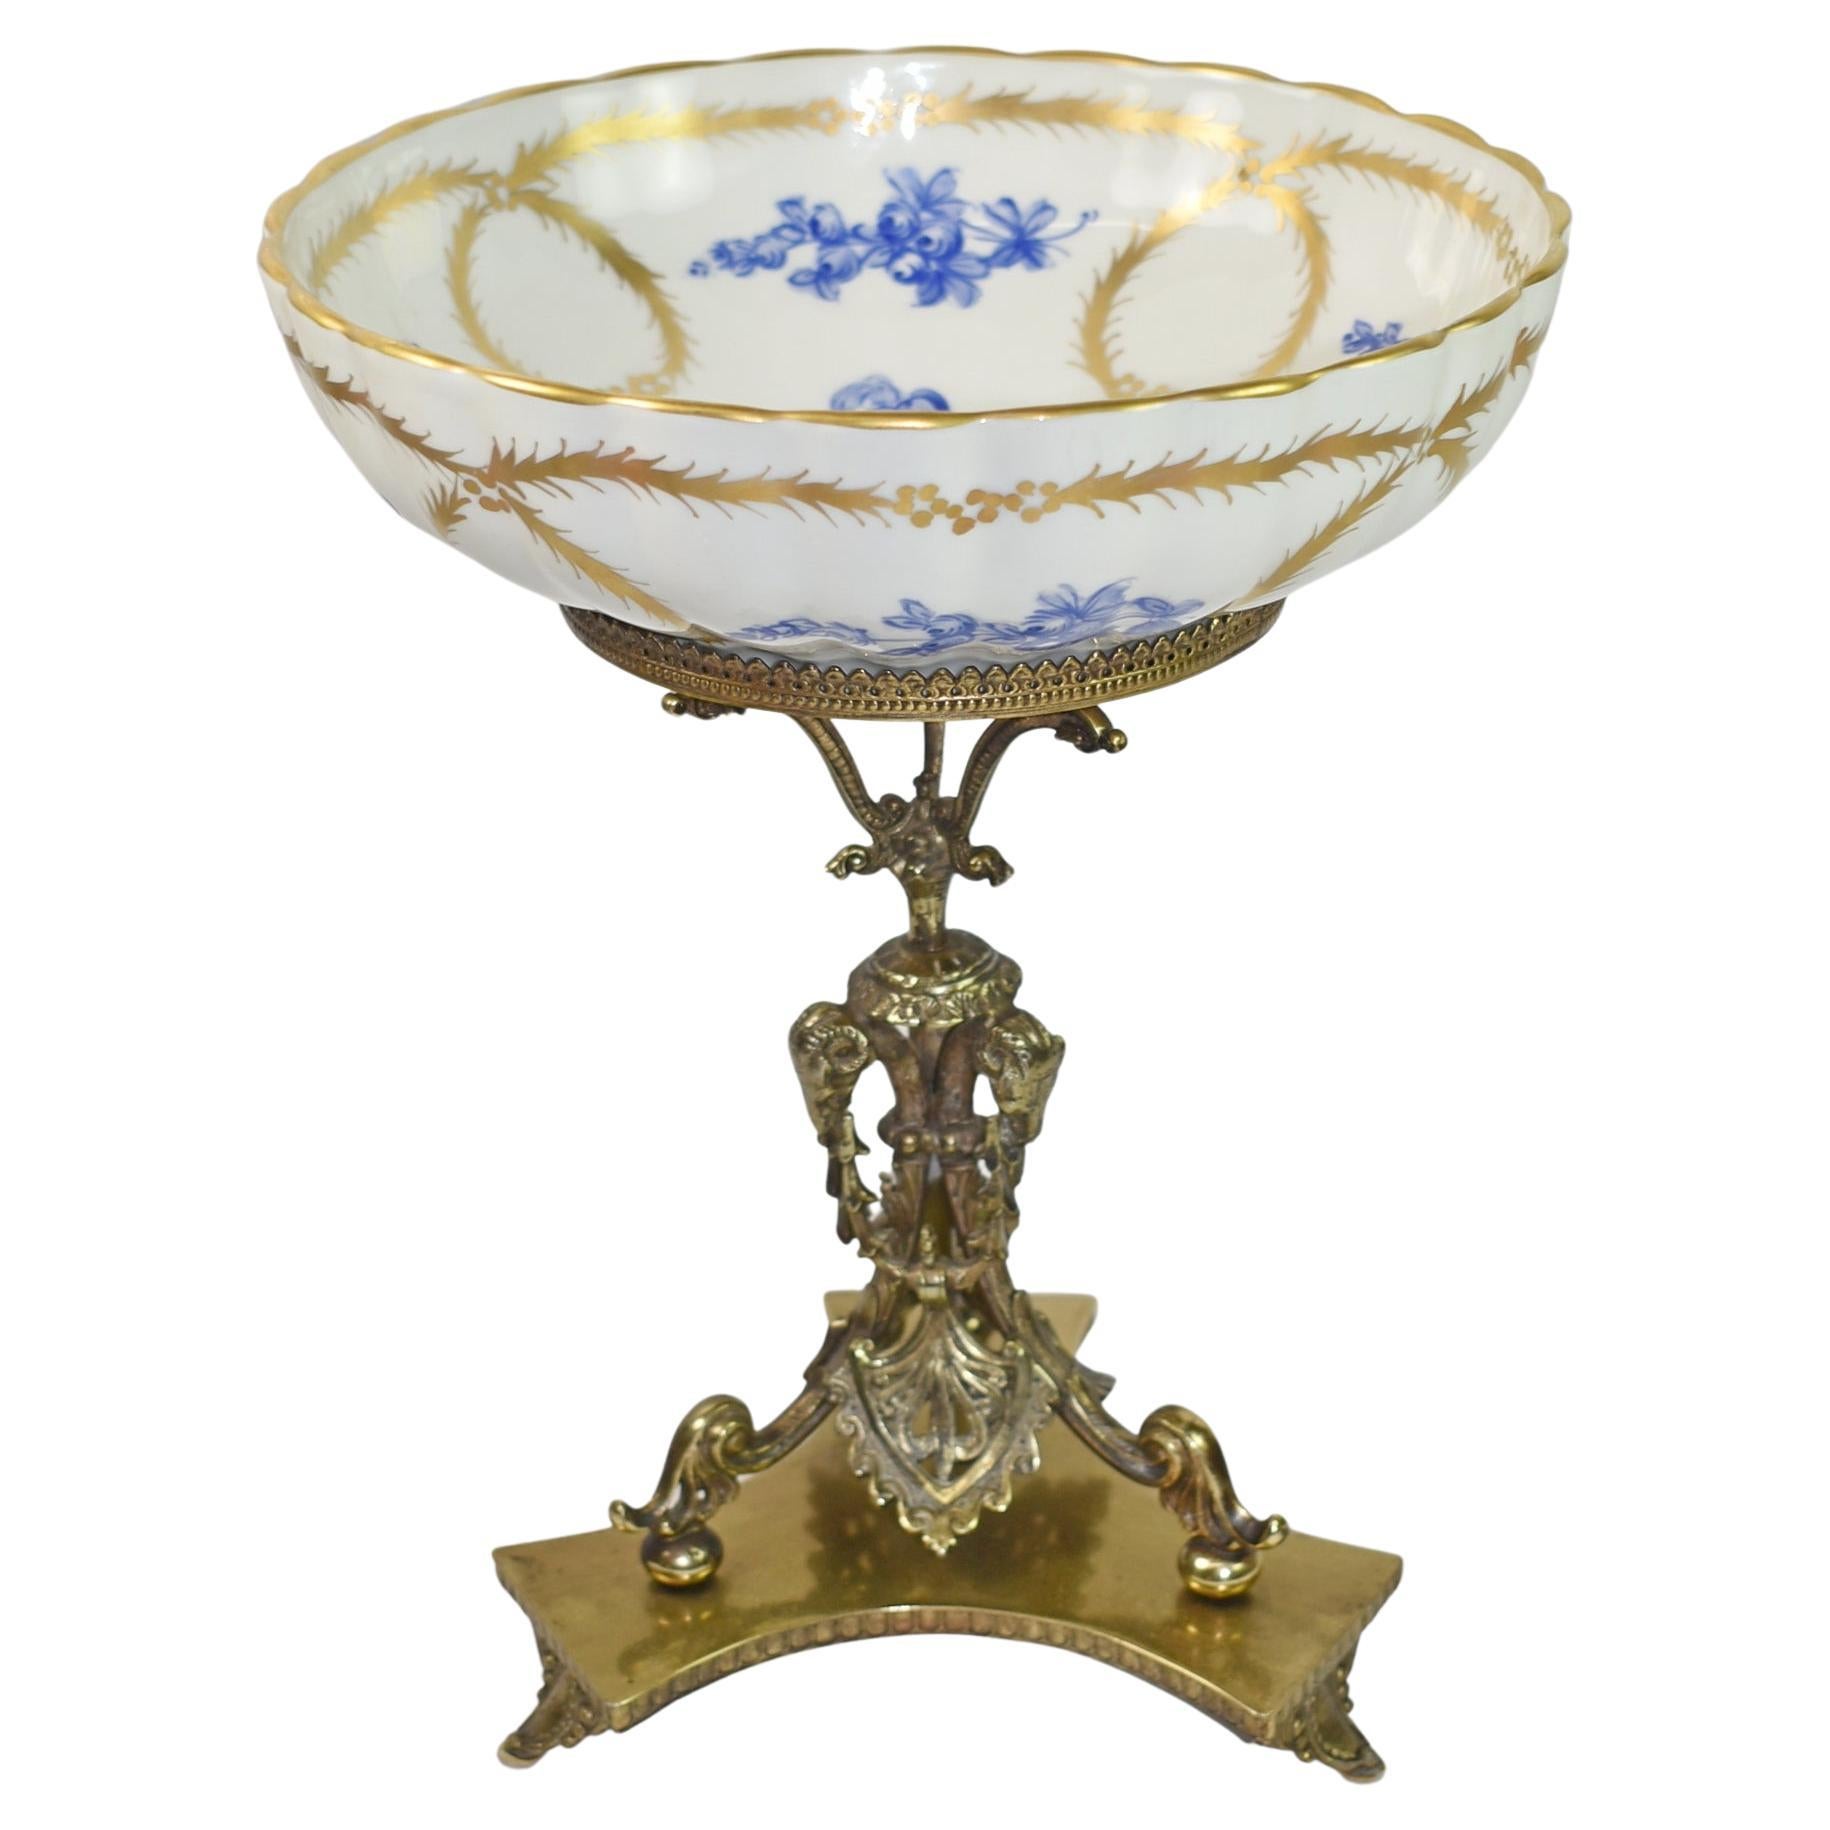 Tazza Brass Center Pedestal with Decorative Meissen Bowl For Sale